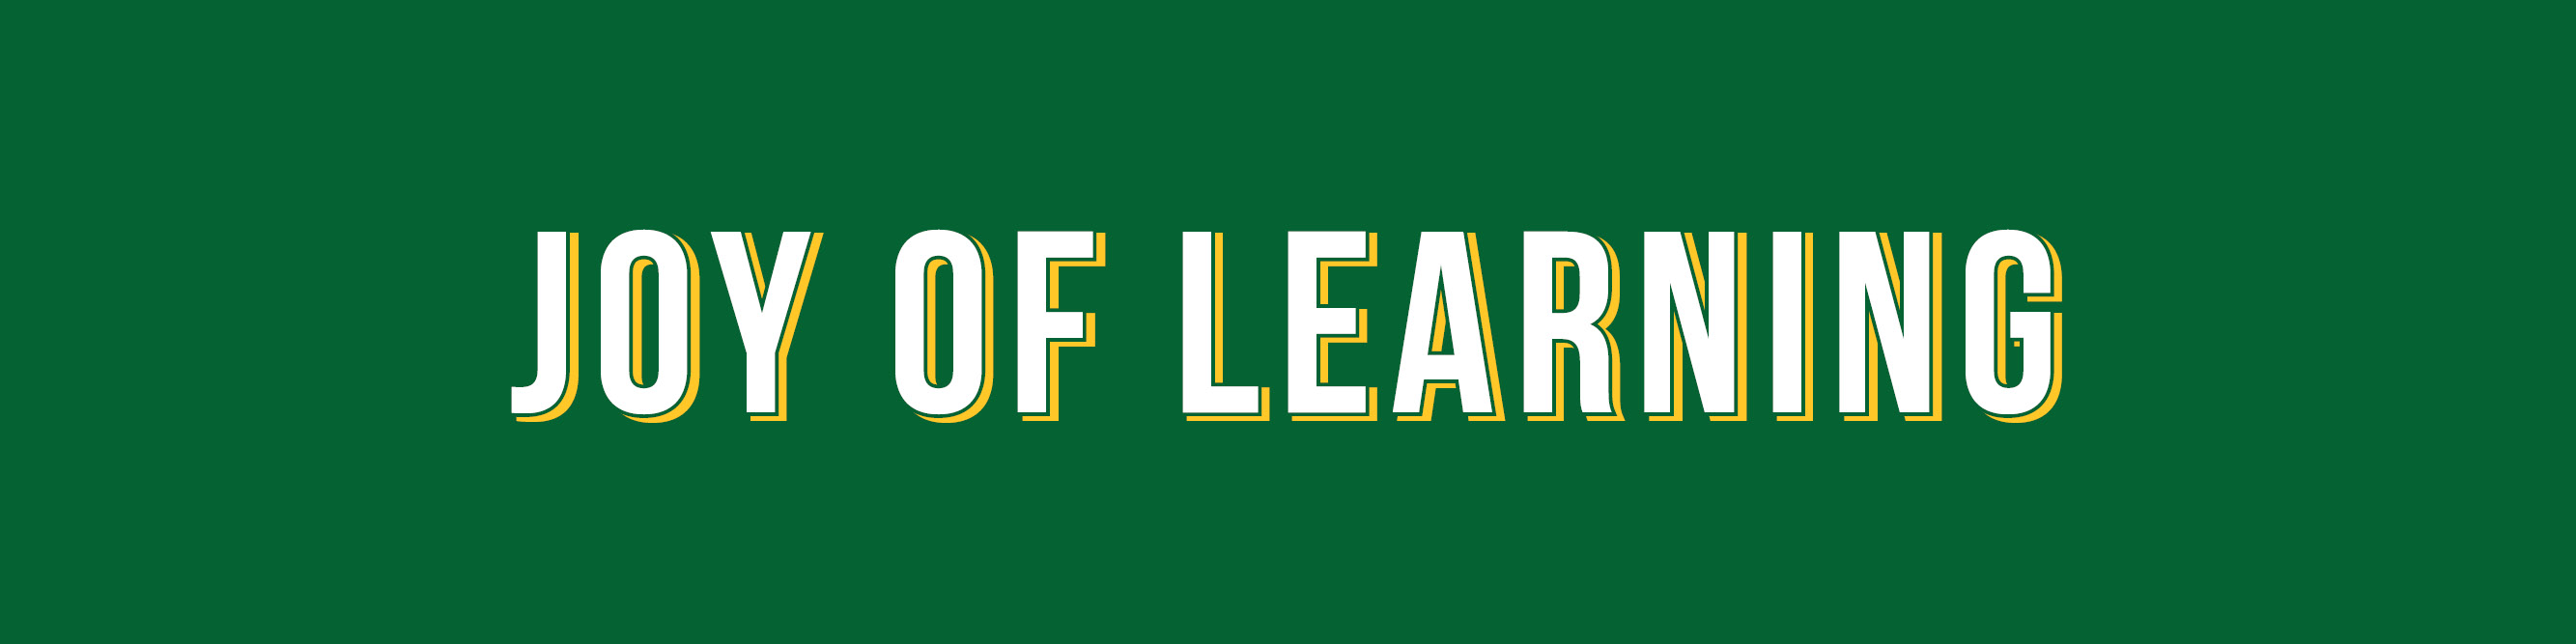 Joy of Learning Banner